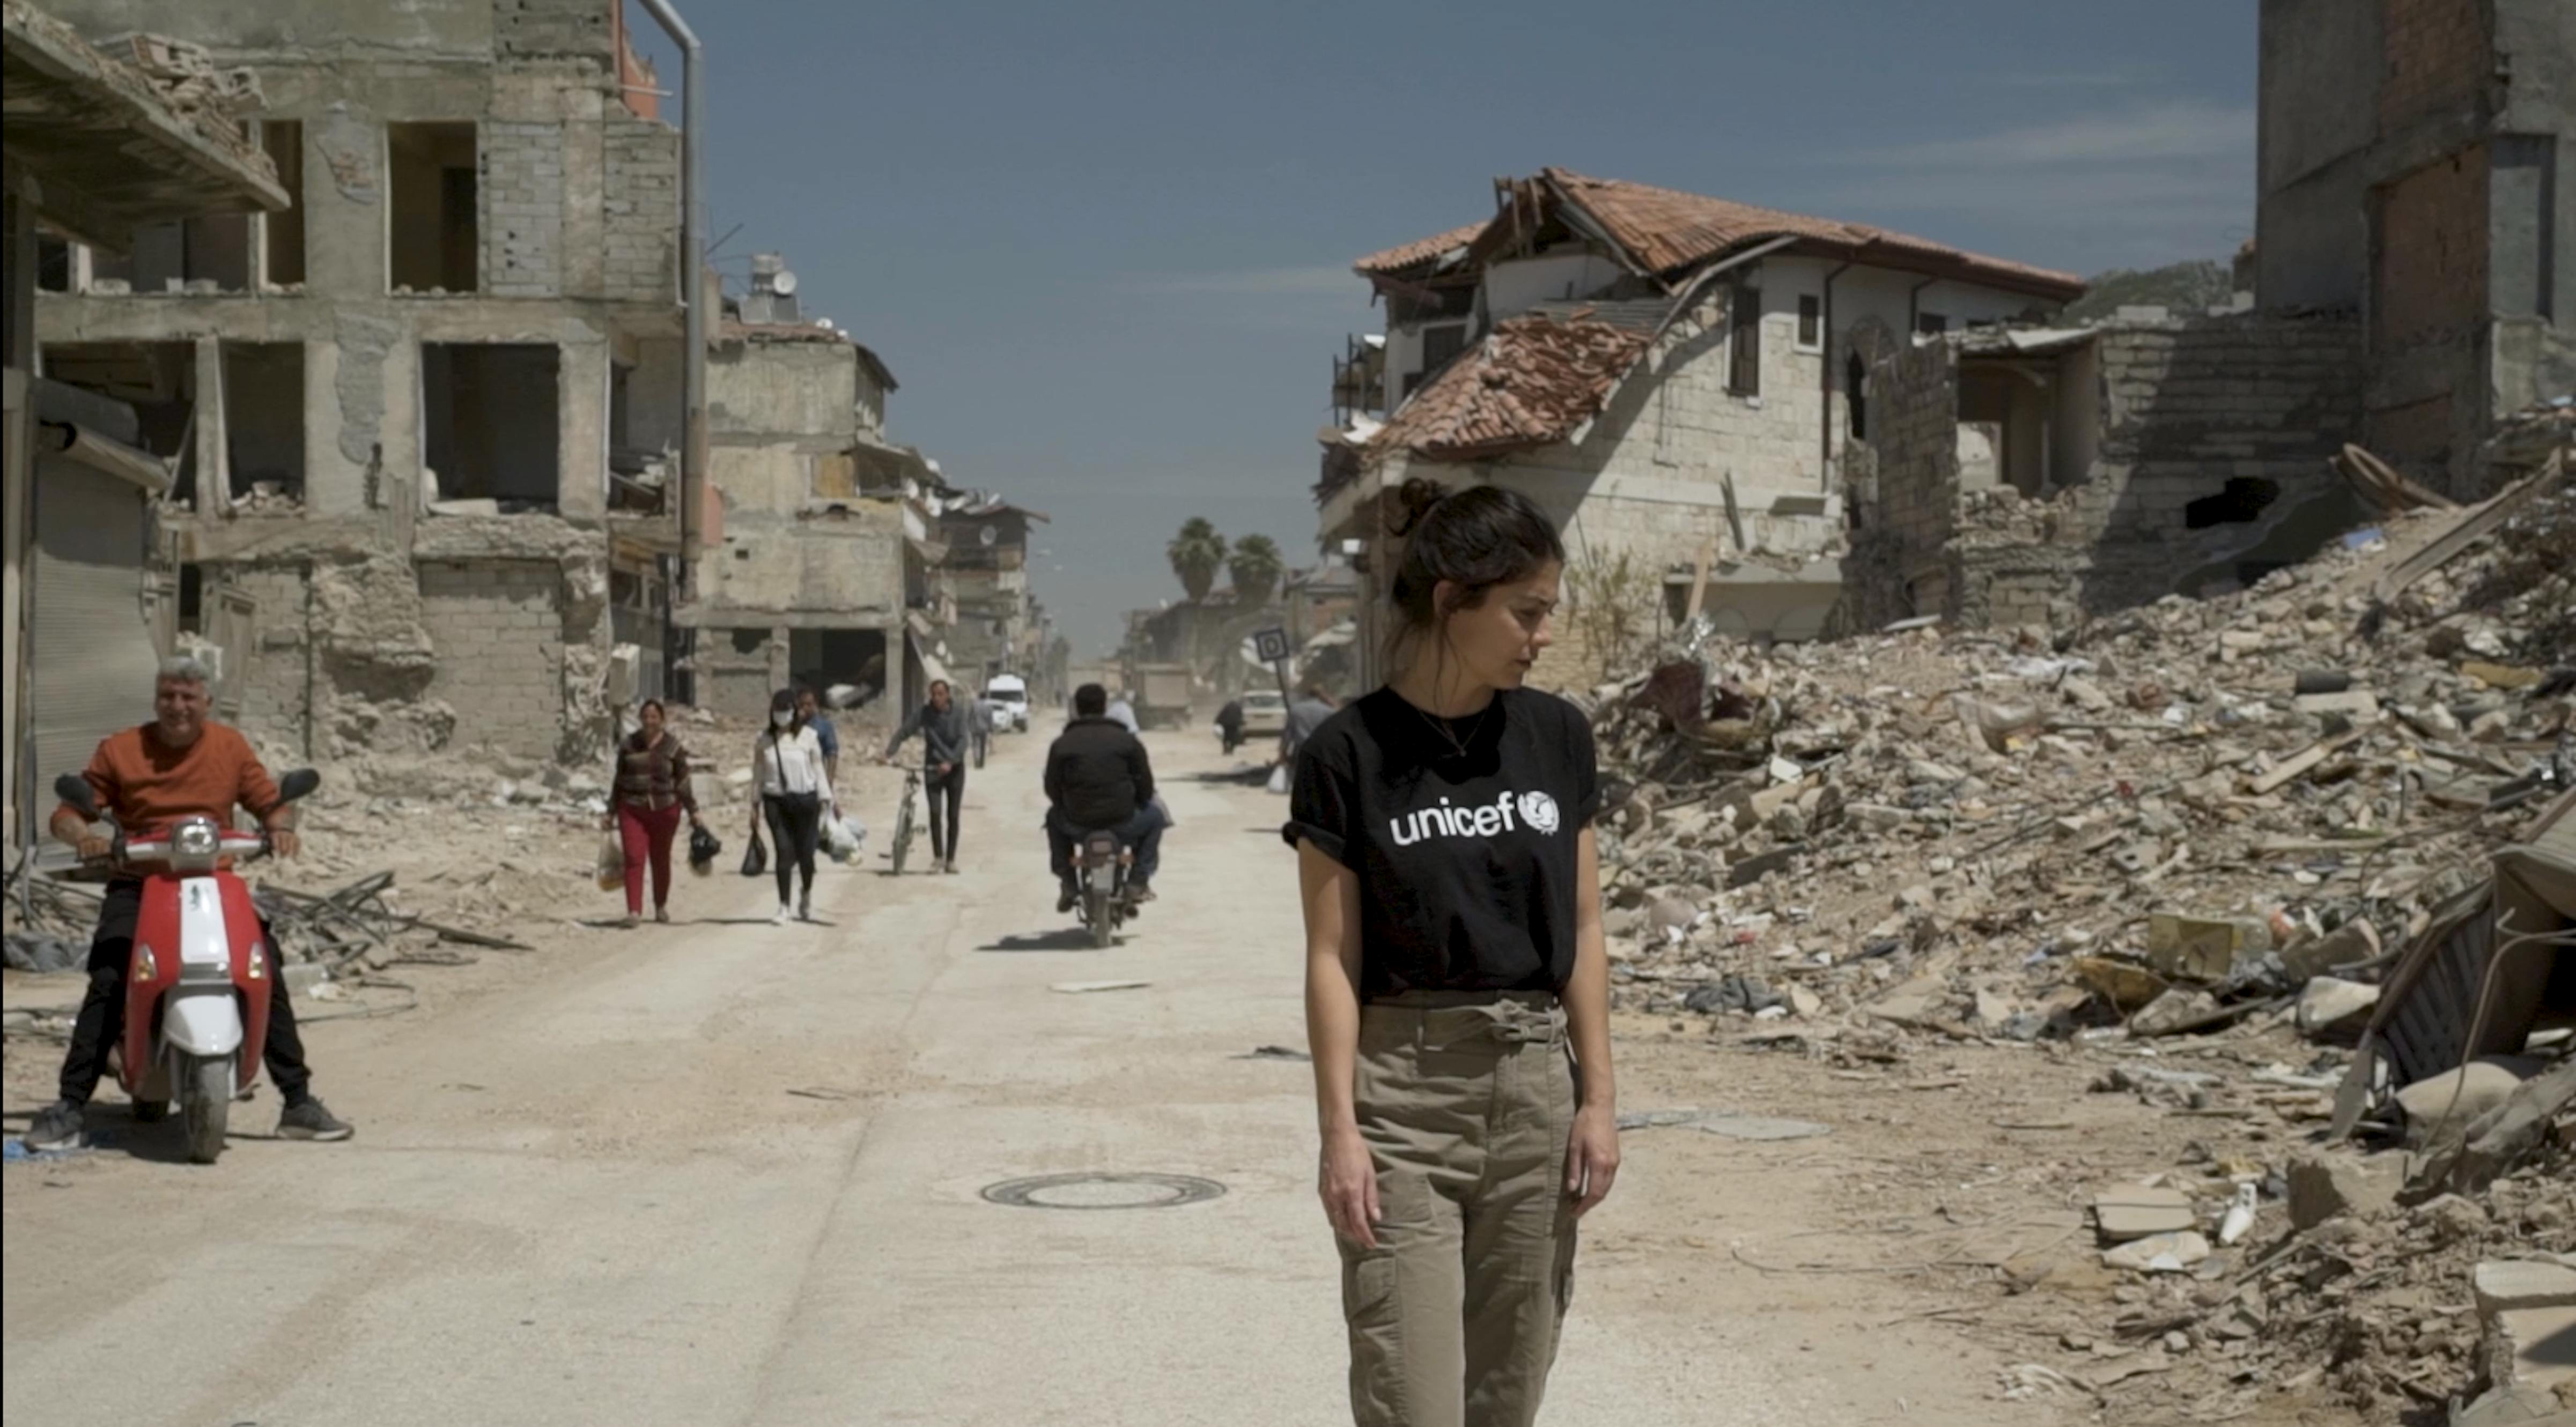 Alessandra Mastronardi nei luoghi colpiti dal terremoto Siria - Turchia